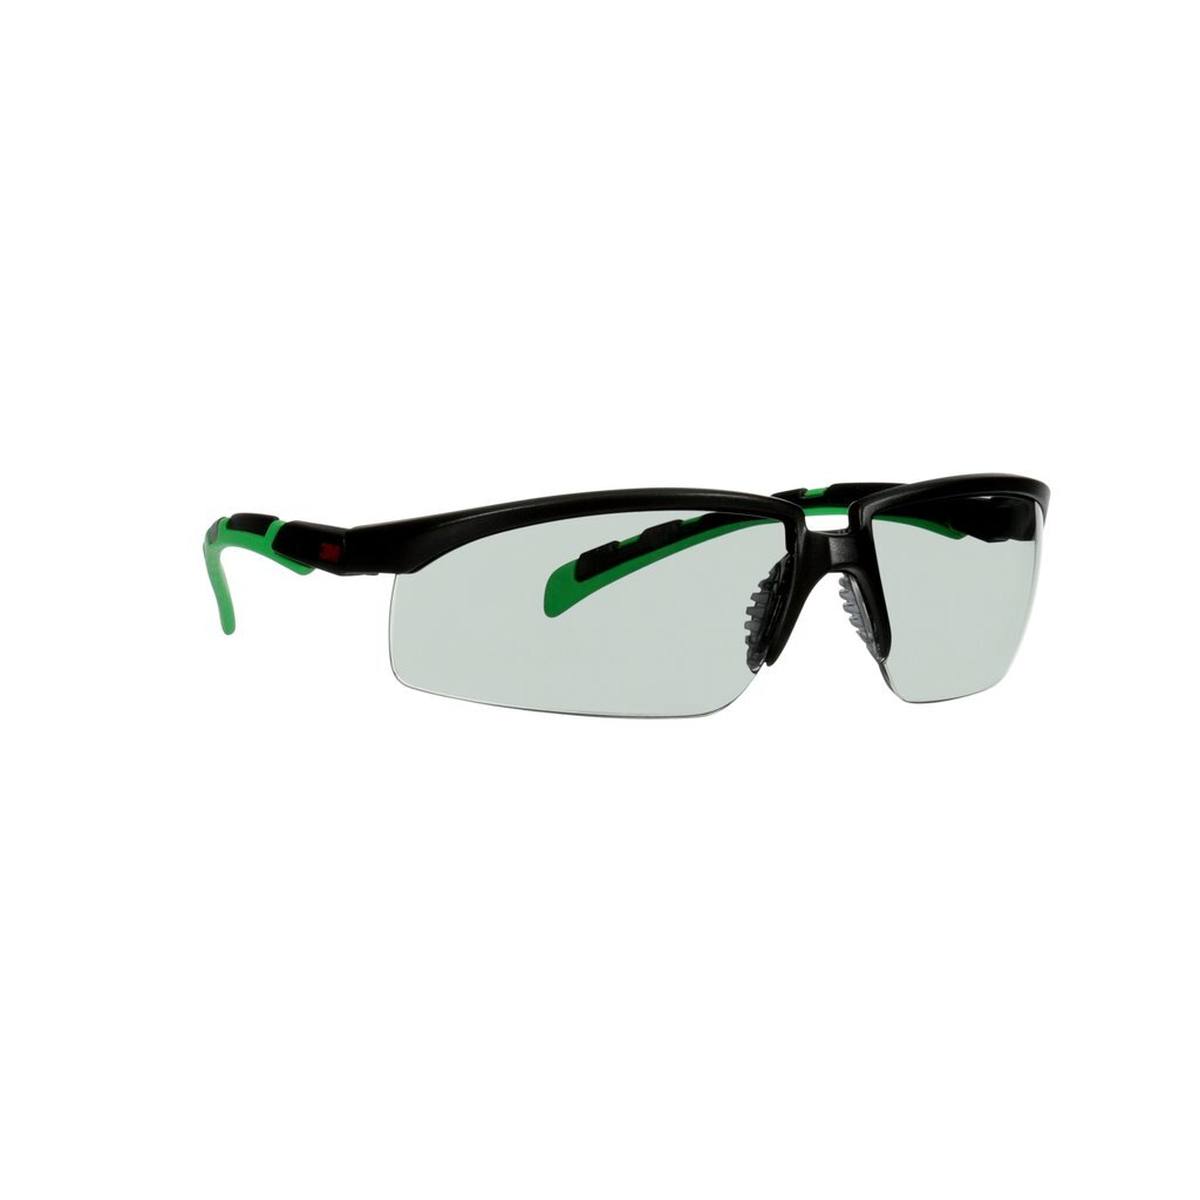 3M Solus 2000 safety spectacles, black/green frame, anti-scratch coating + (K), grey lens IR 1.7, S2017ASP-BLK